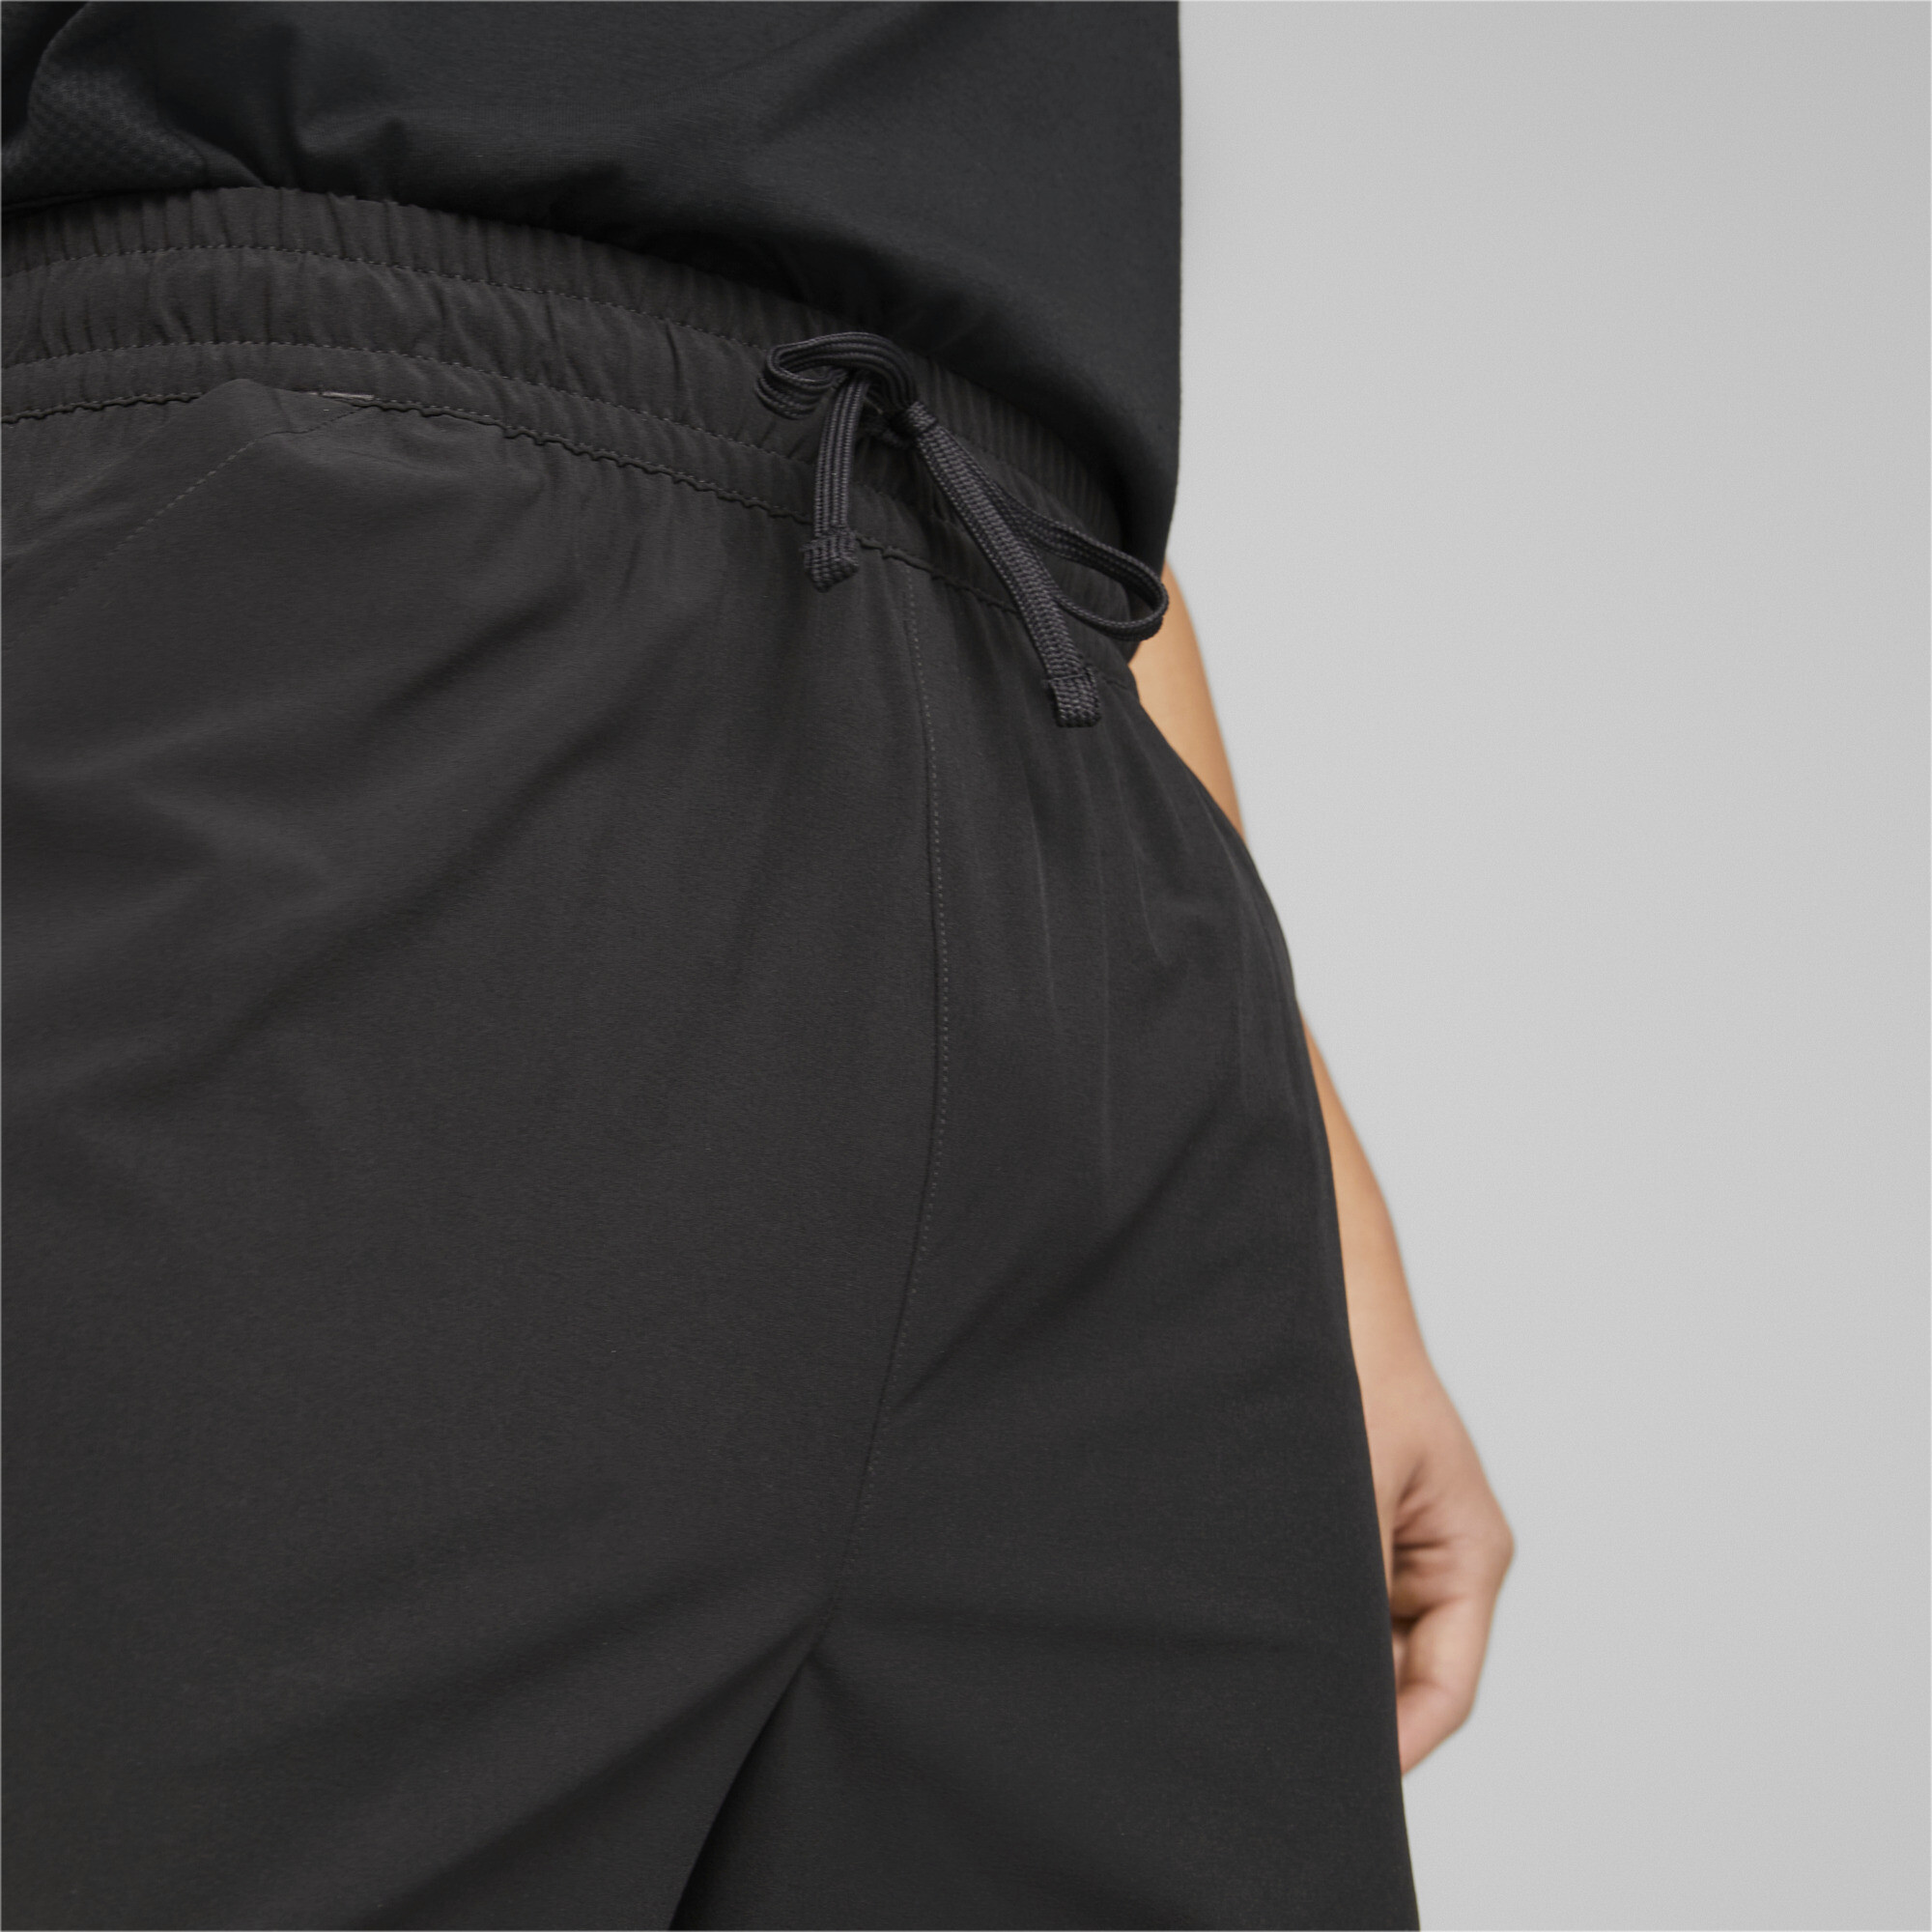 Men's PUMA Fit 7 Stretch Woven Training Shorts Men In Black, Size XL